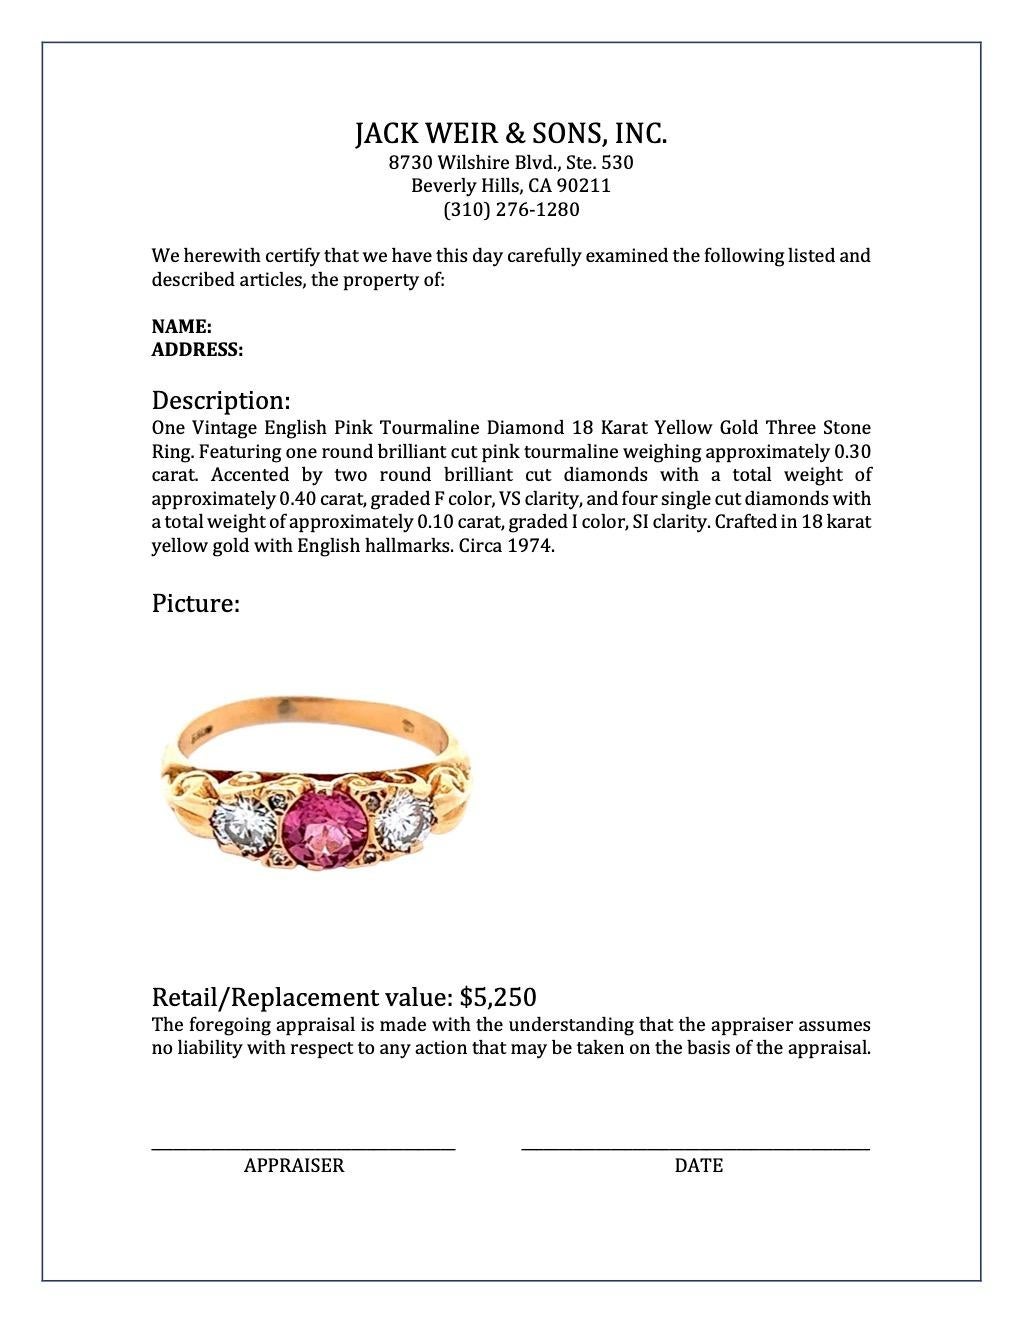 Vintage English Pink Tourmaline Diamond 18 Karat Yellow Gold Three Stone Ring 1